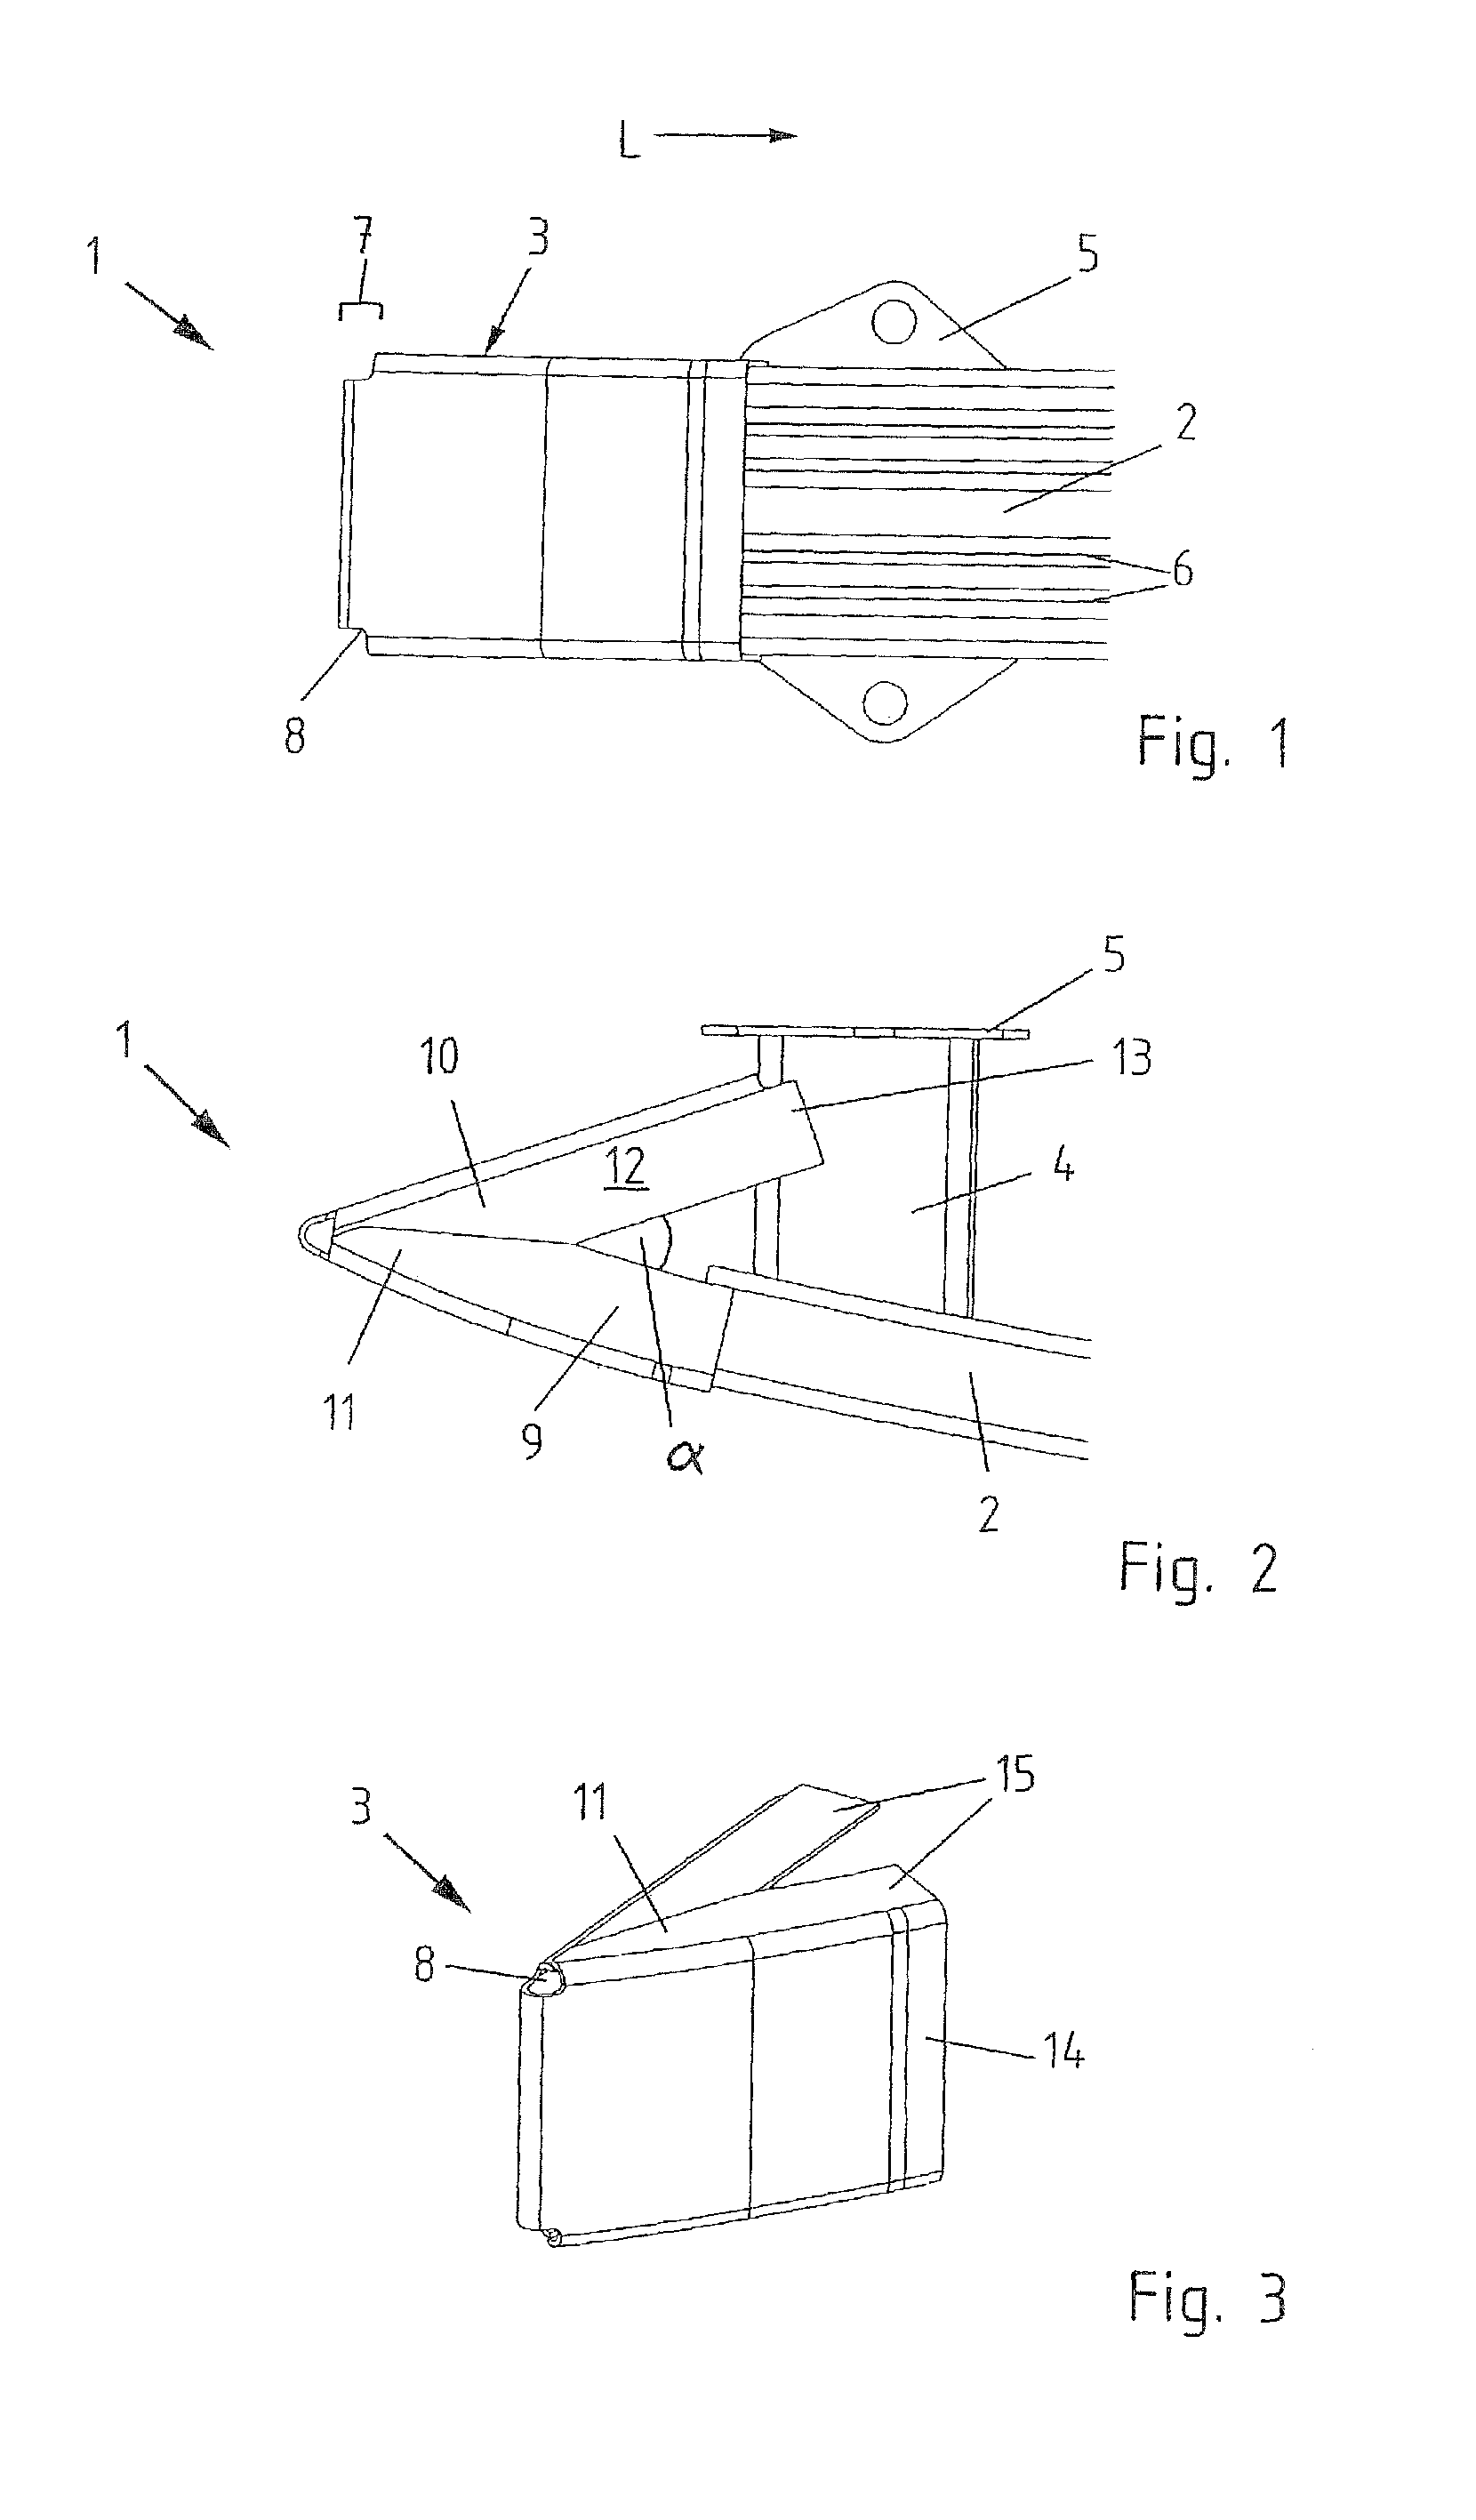 Automobile bumper arrangement and modular bumper system